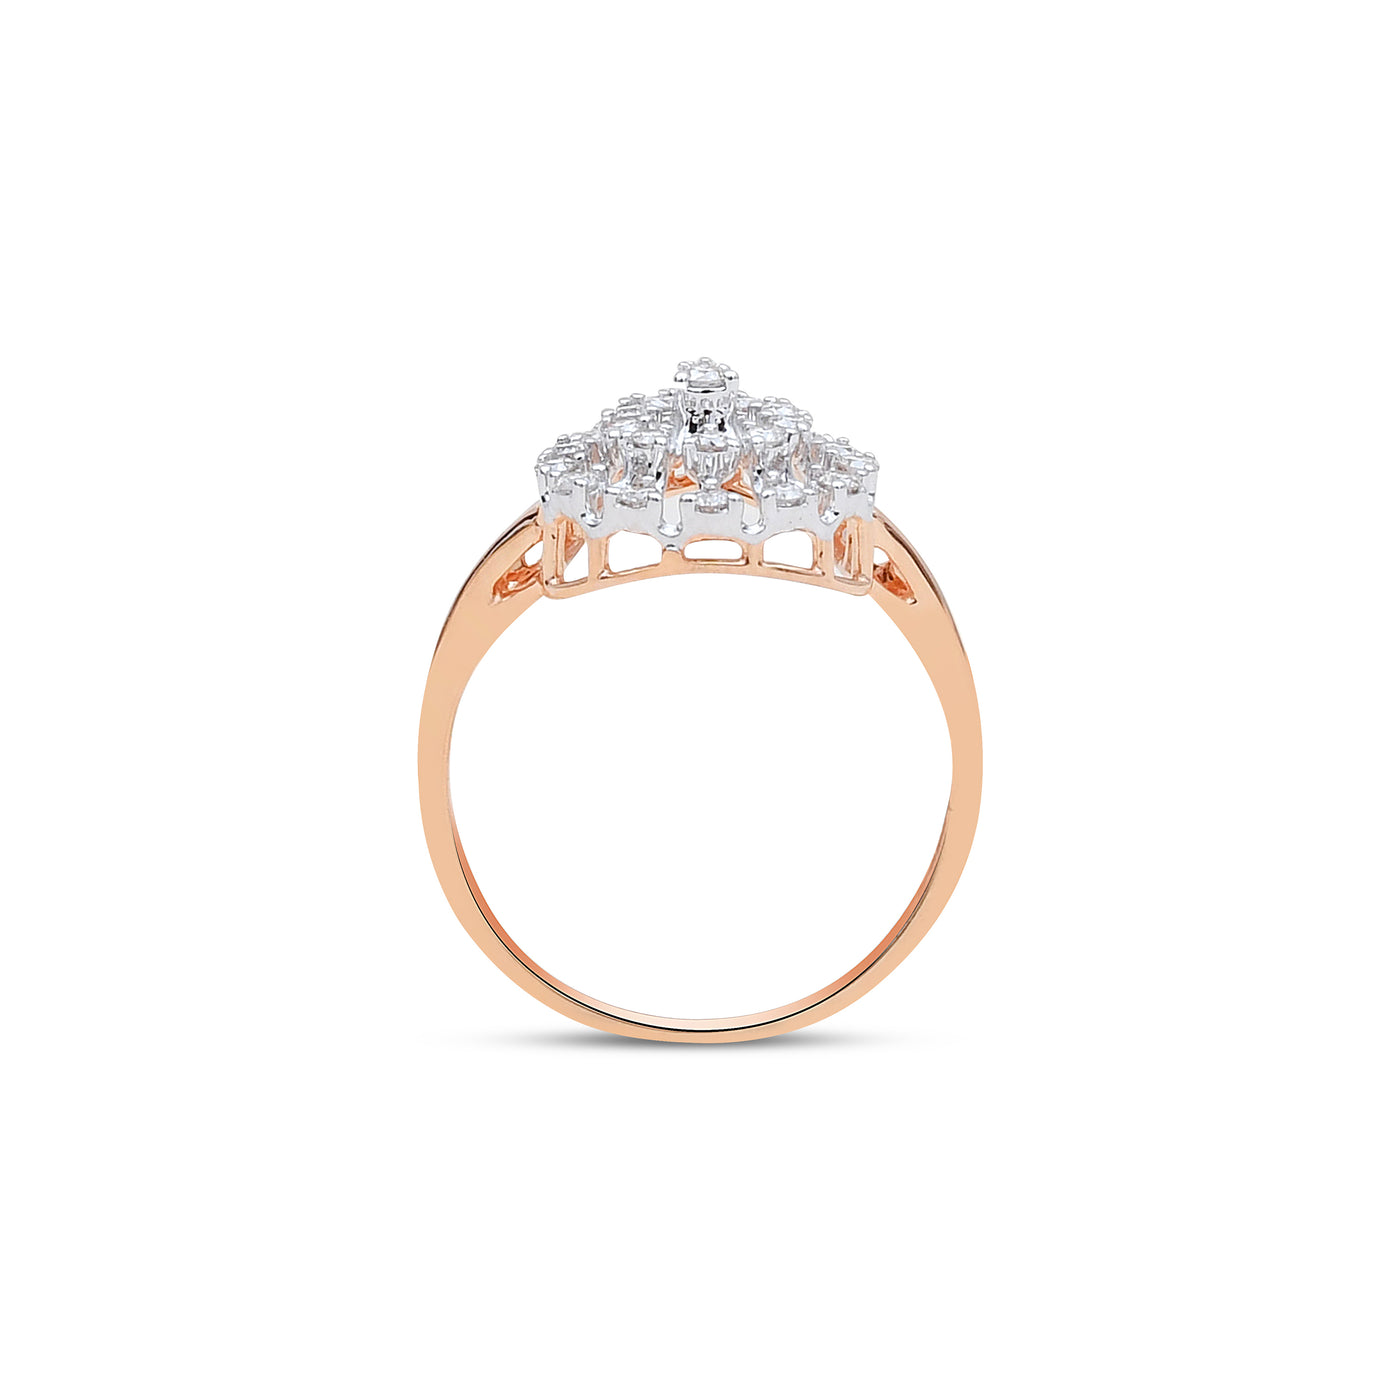 The Opulent Pear Diamond Ring